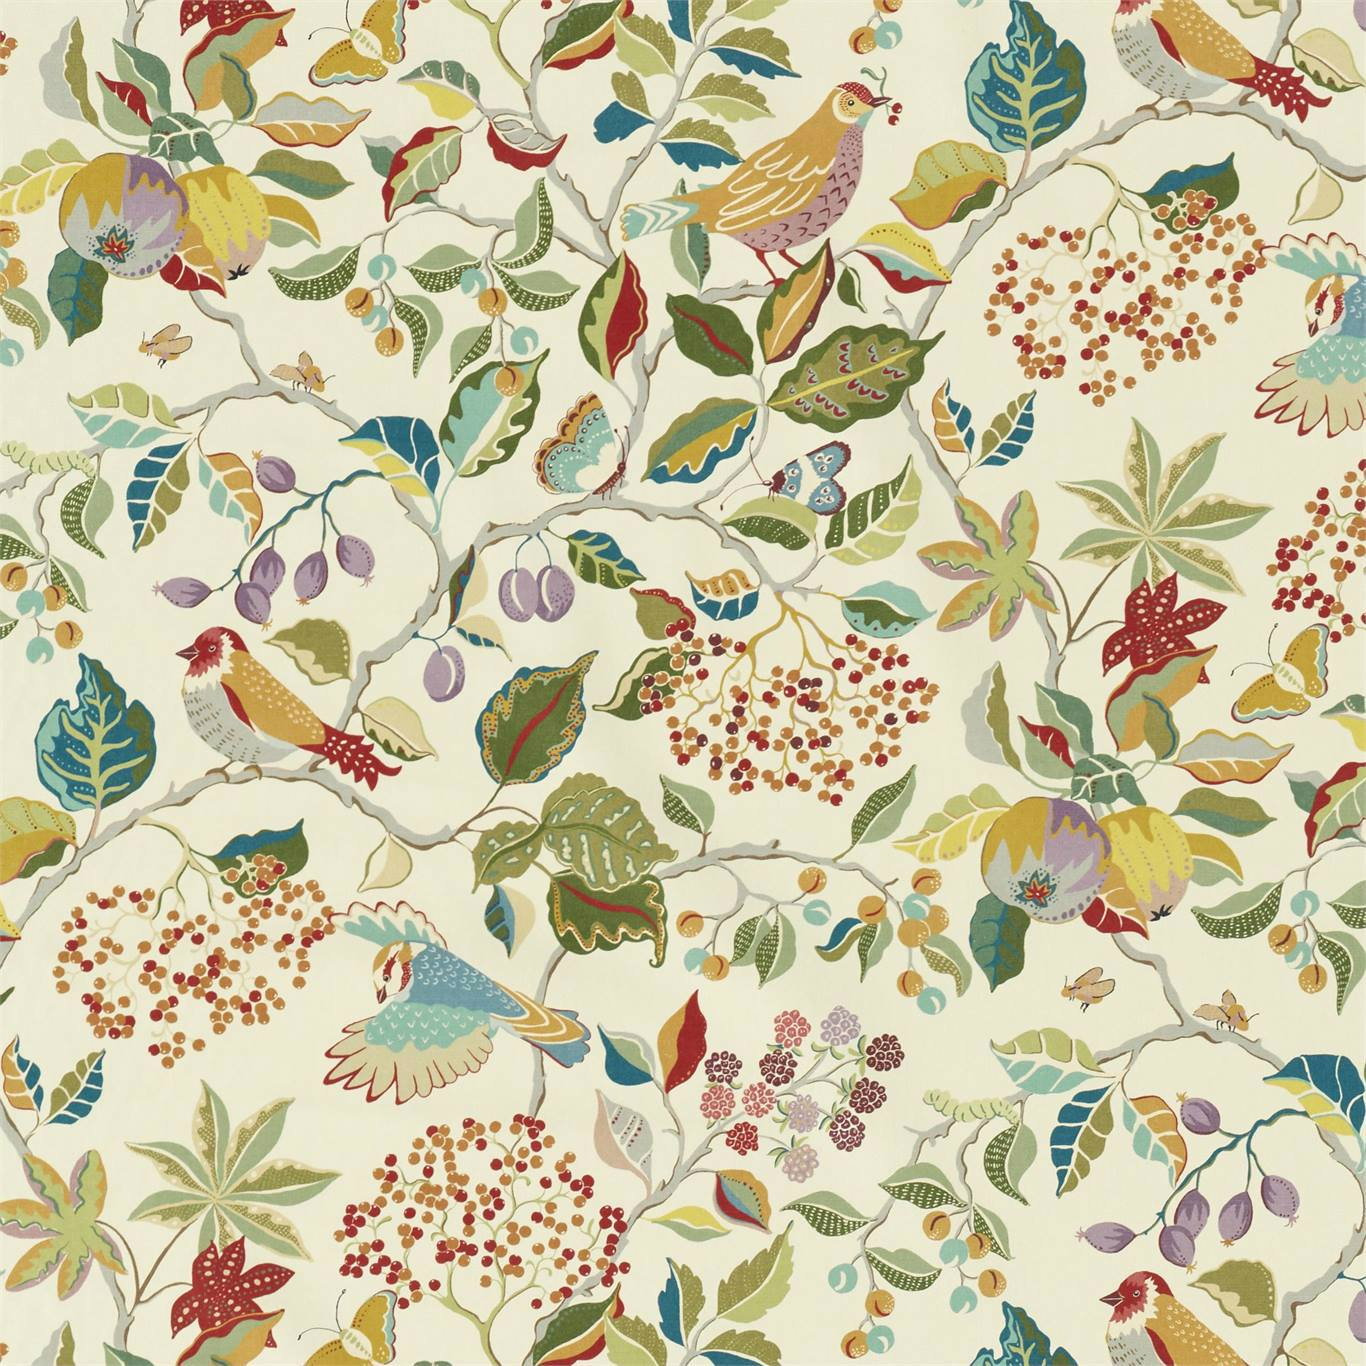 Birds & Berries Rowan Berry Fabric by SAN